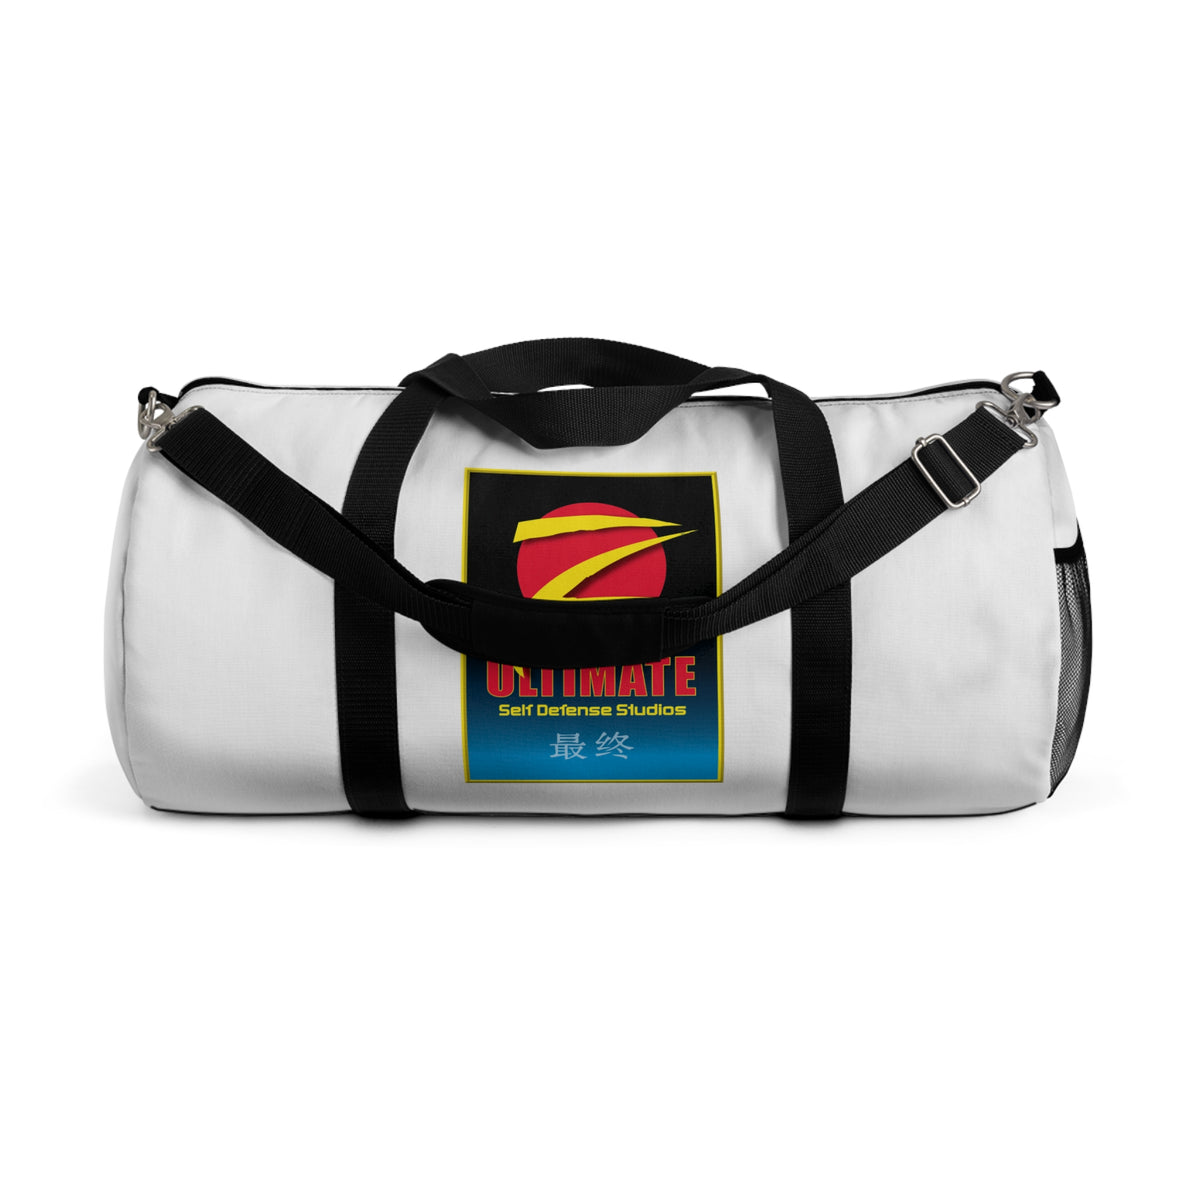 Z-Ultimate White Duffel Bag - White